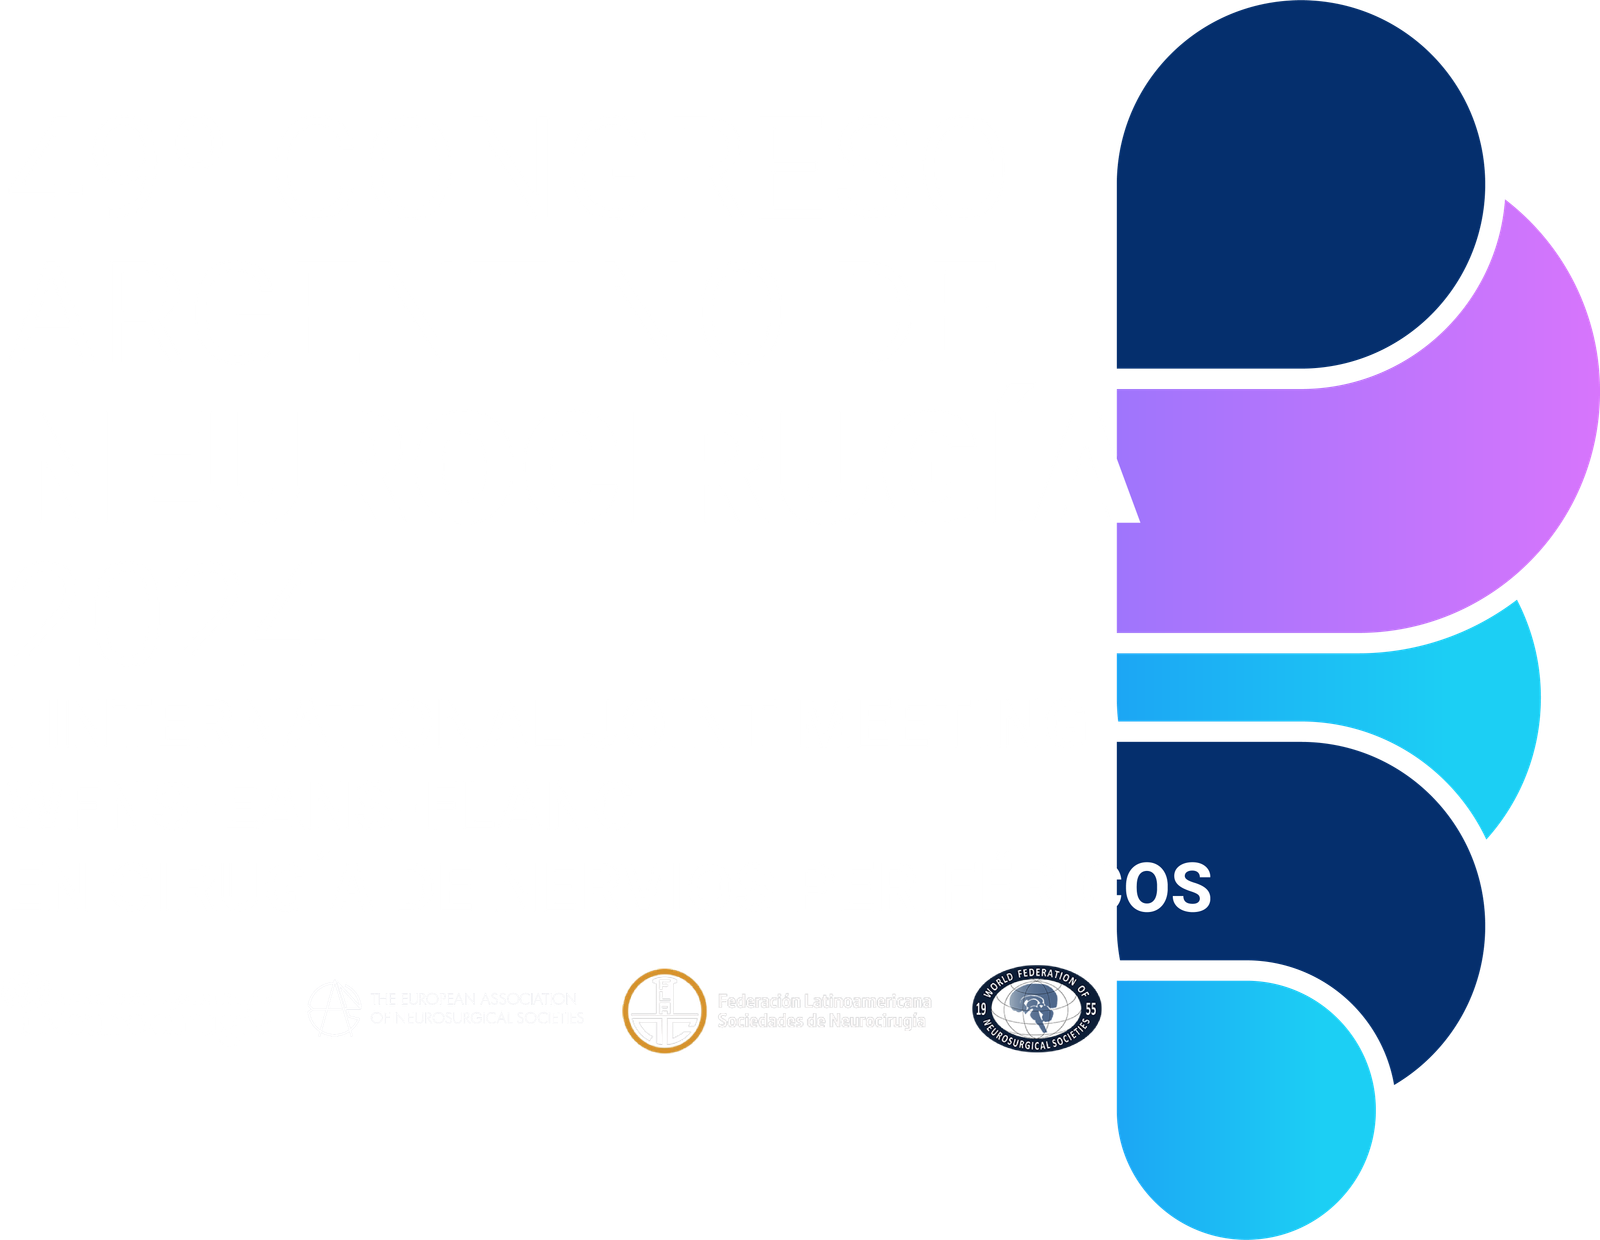 49º Congreso Argentino de Neurocirugía 2024